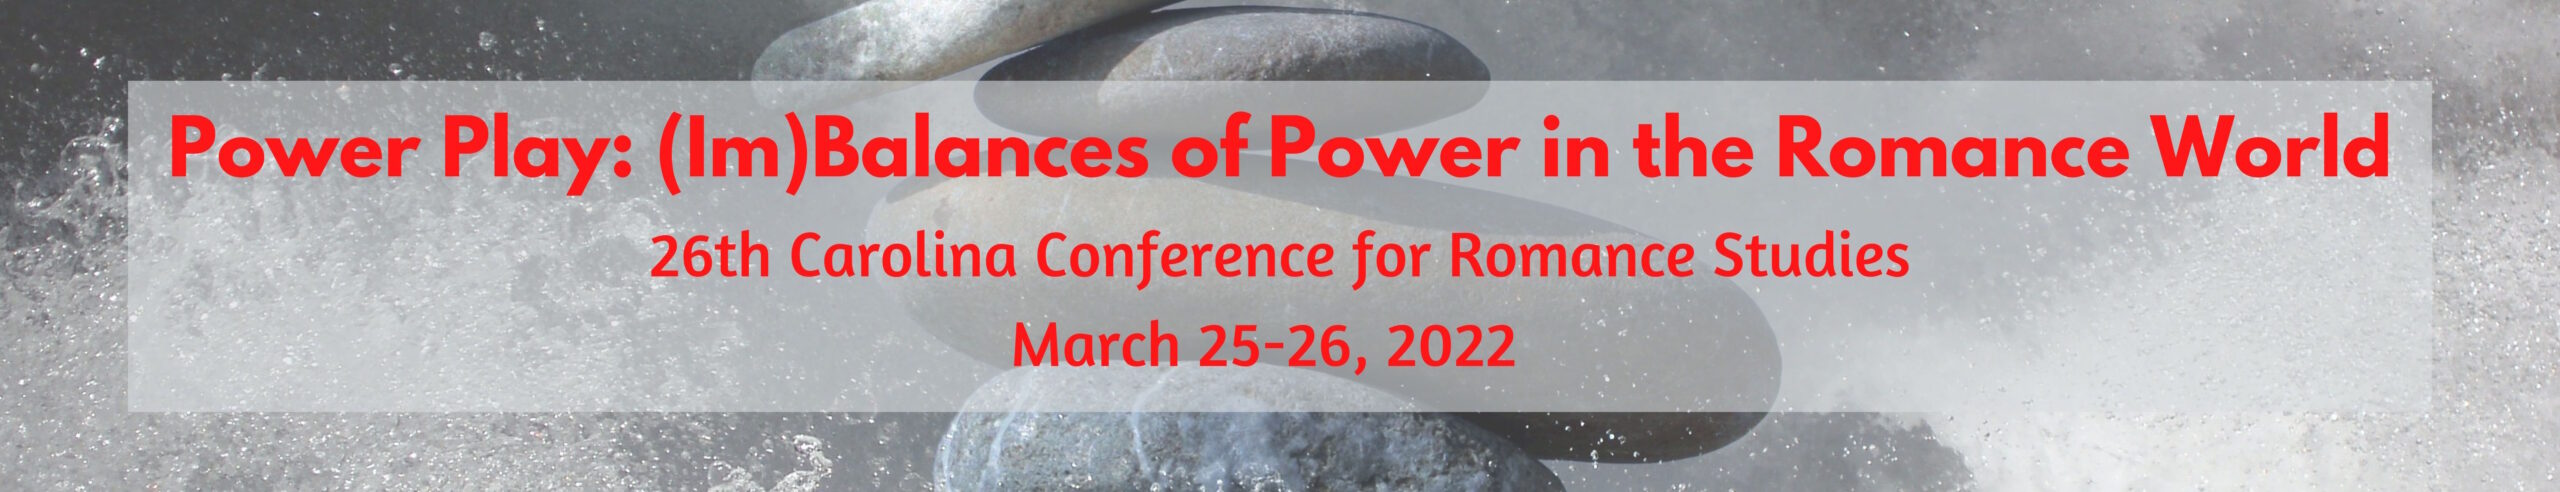 Carolina Conference for Romance Studies